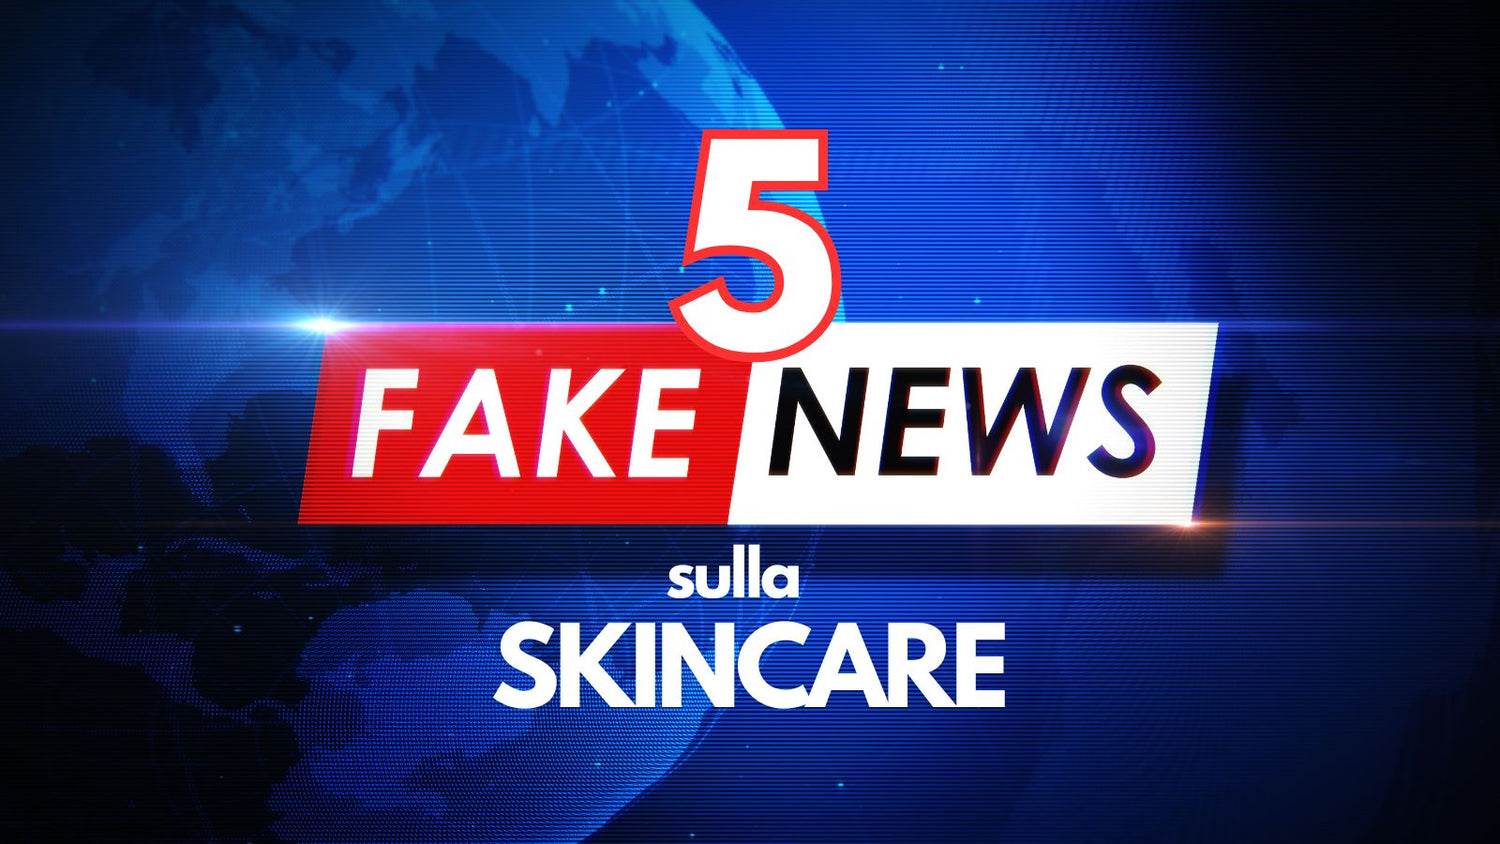 5 fake news sulla skincare - Aura Skin